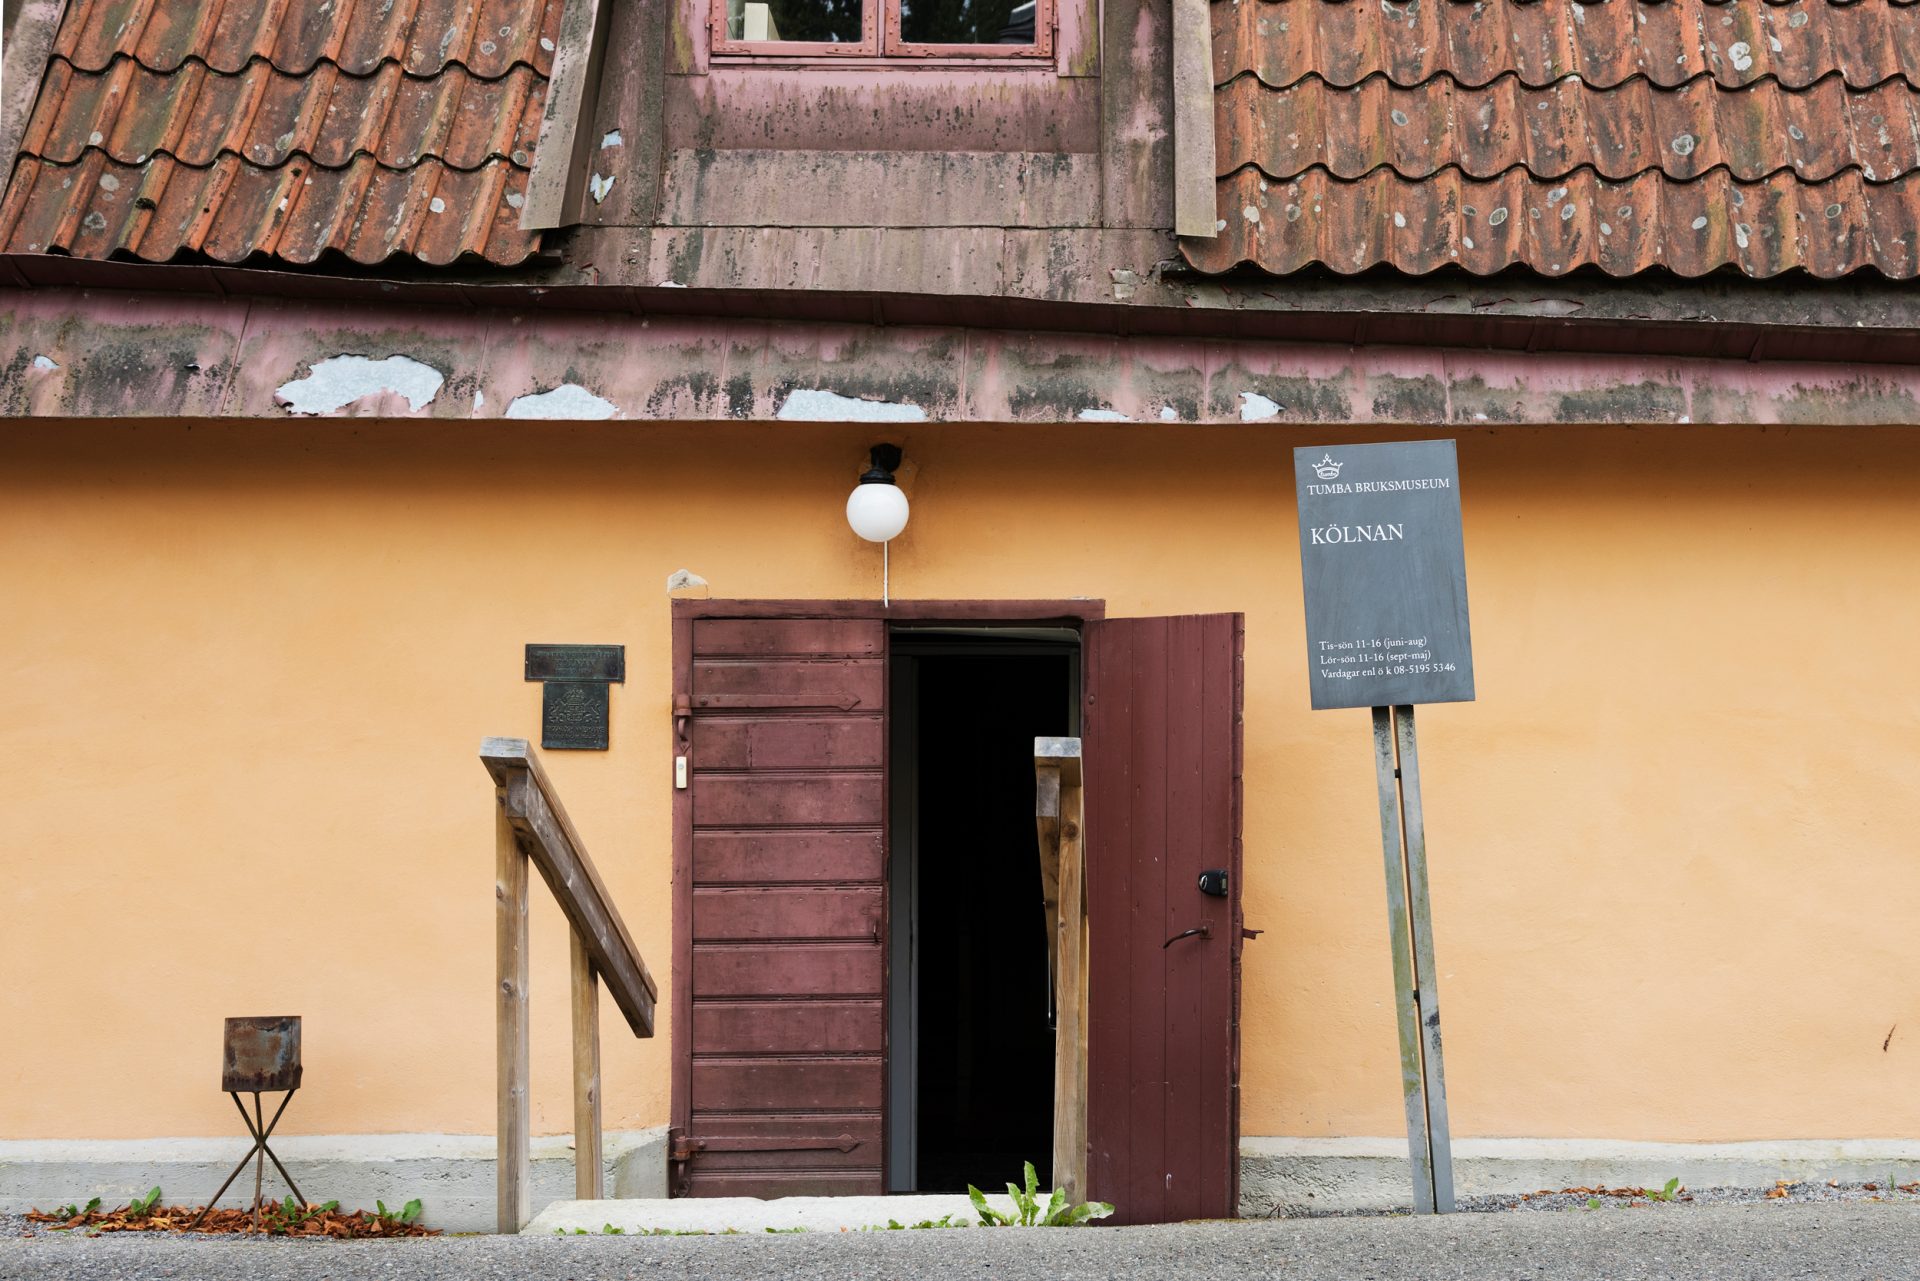 The entrance to Kölnan. The door is open.